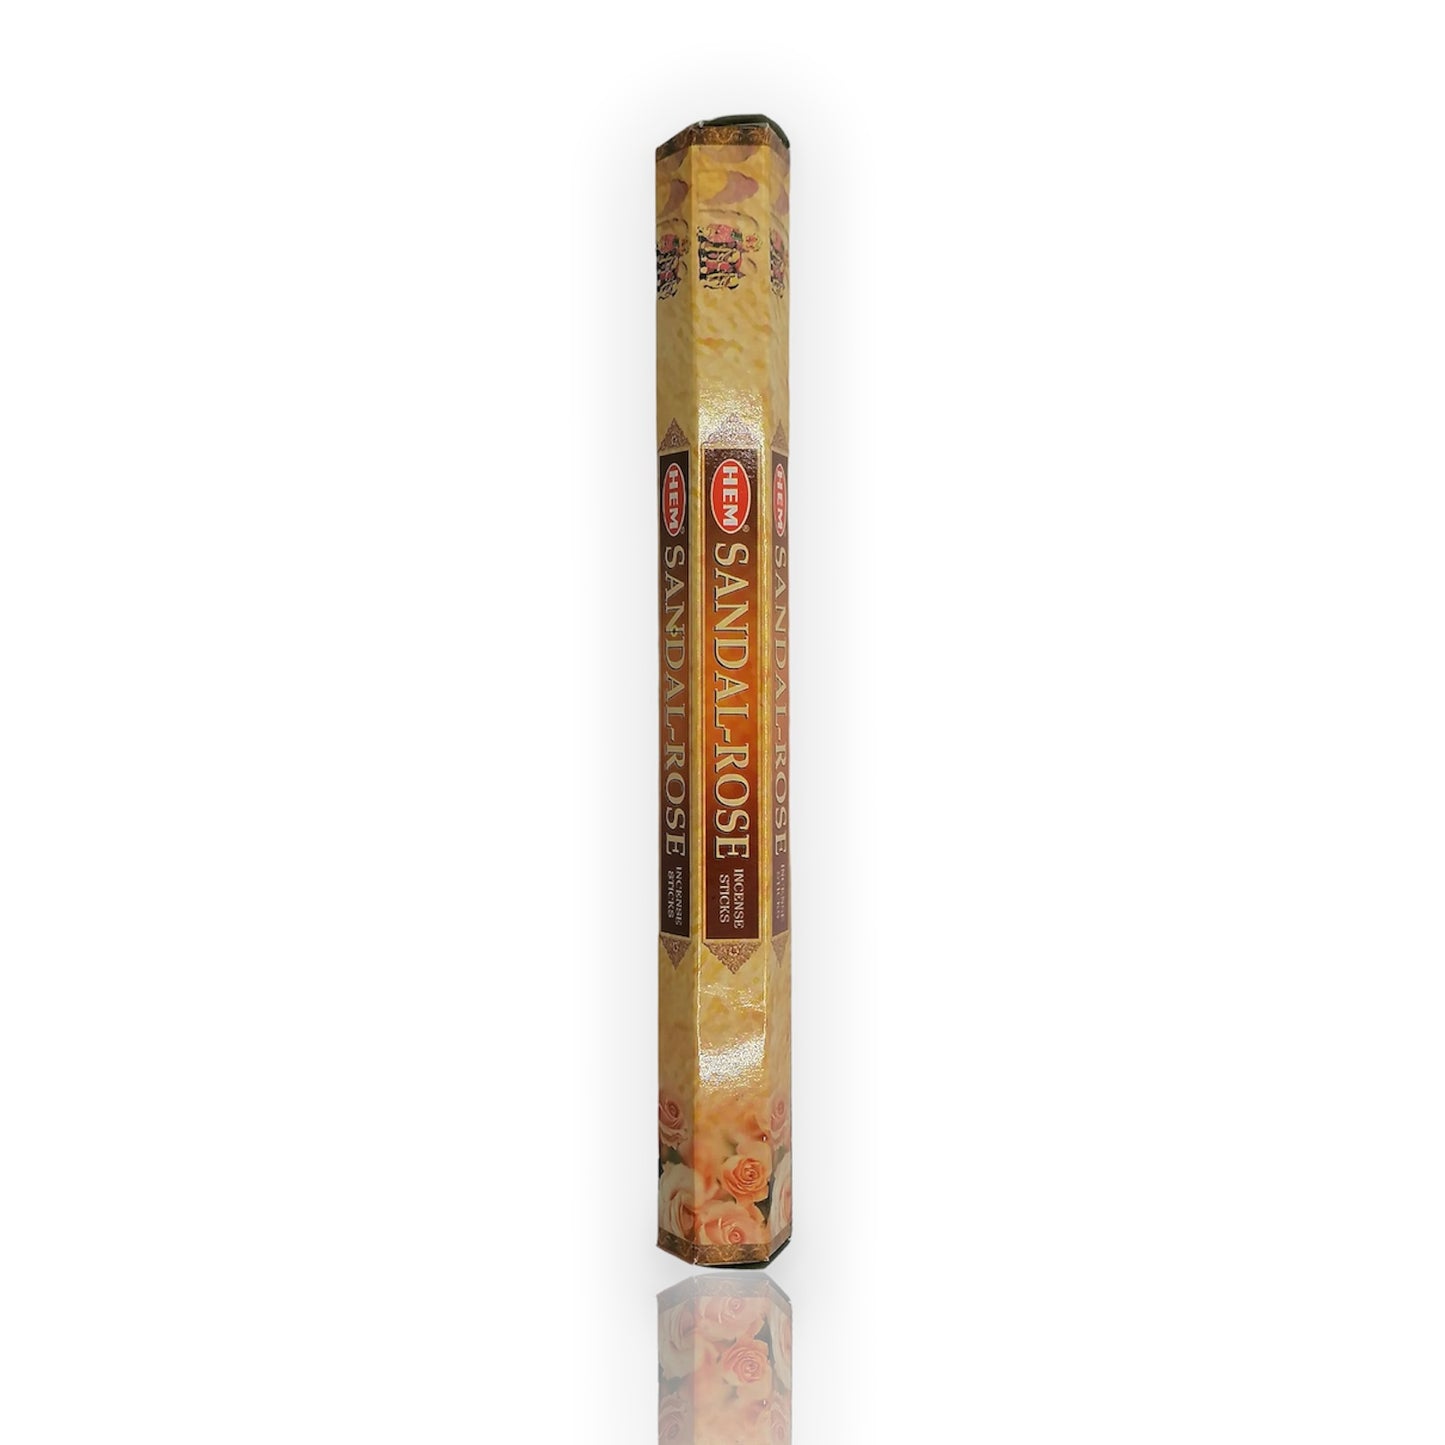 HEM Incense Sticks: Sandal Rose